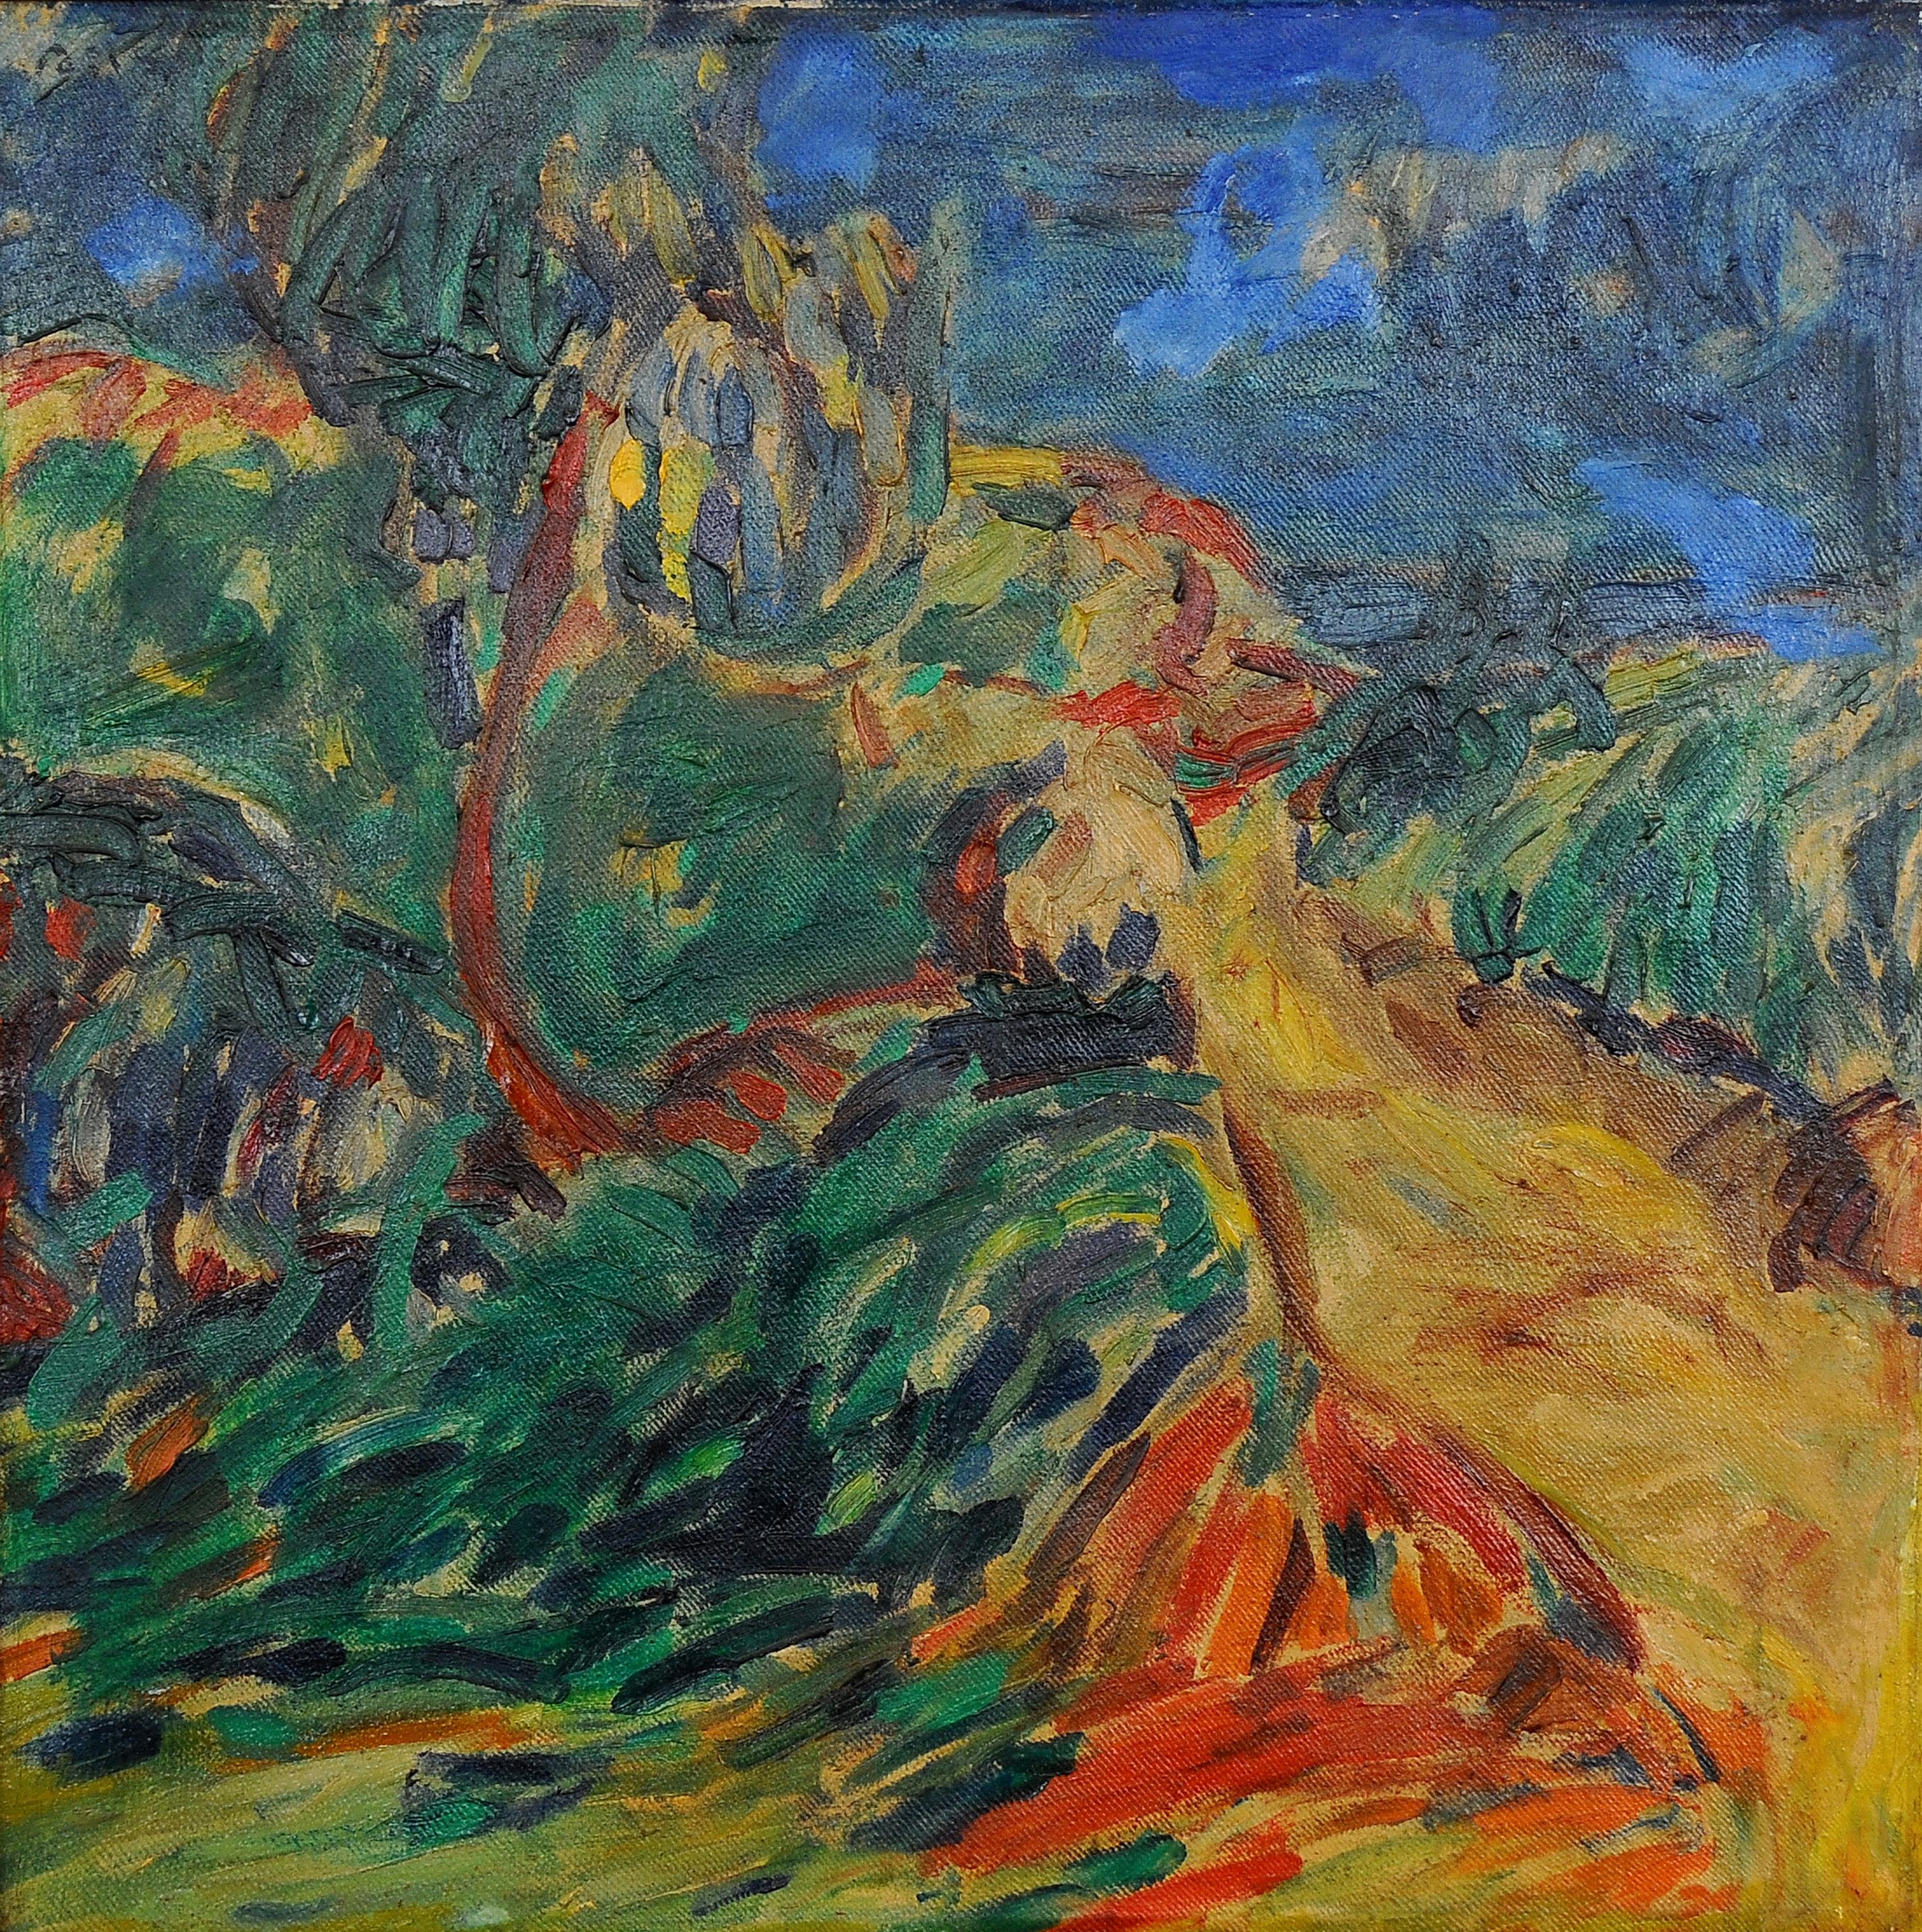 İsimsiz-Untitled, 1983,Tuval üzerine yağlıboya, Oil on canvas, 50x50 cm